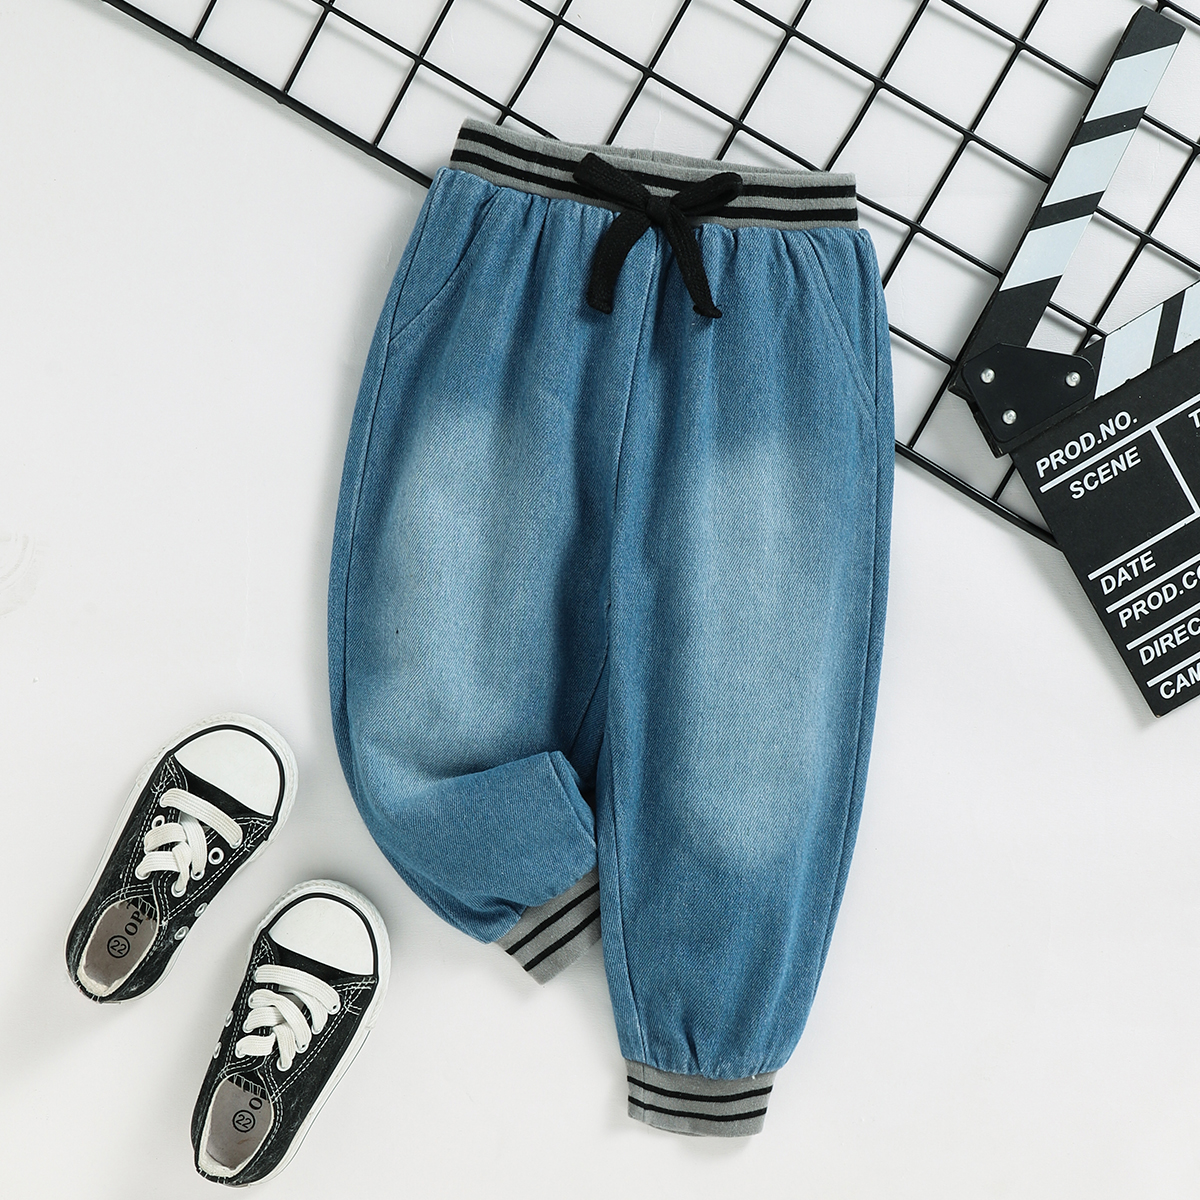 100% cotton baby boy/girl distressed jeans denim pants